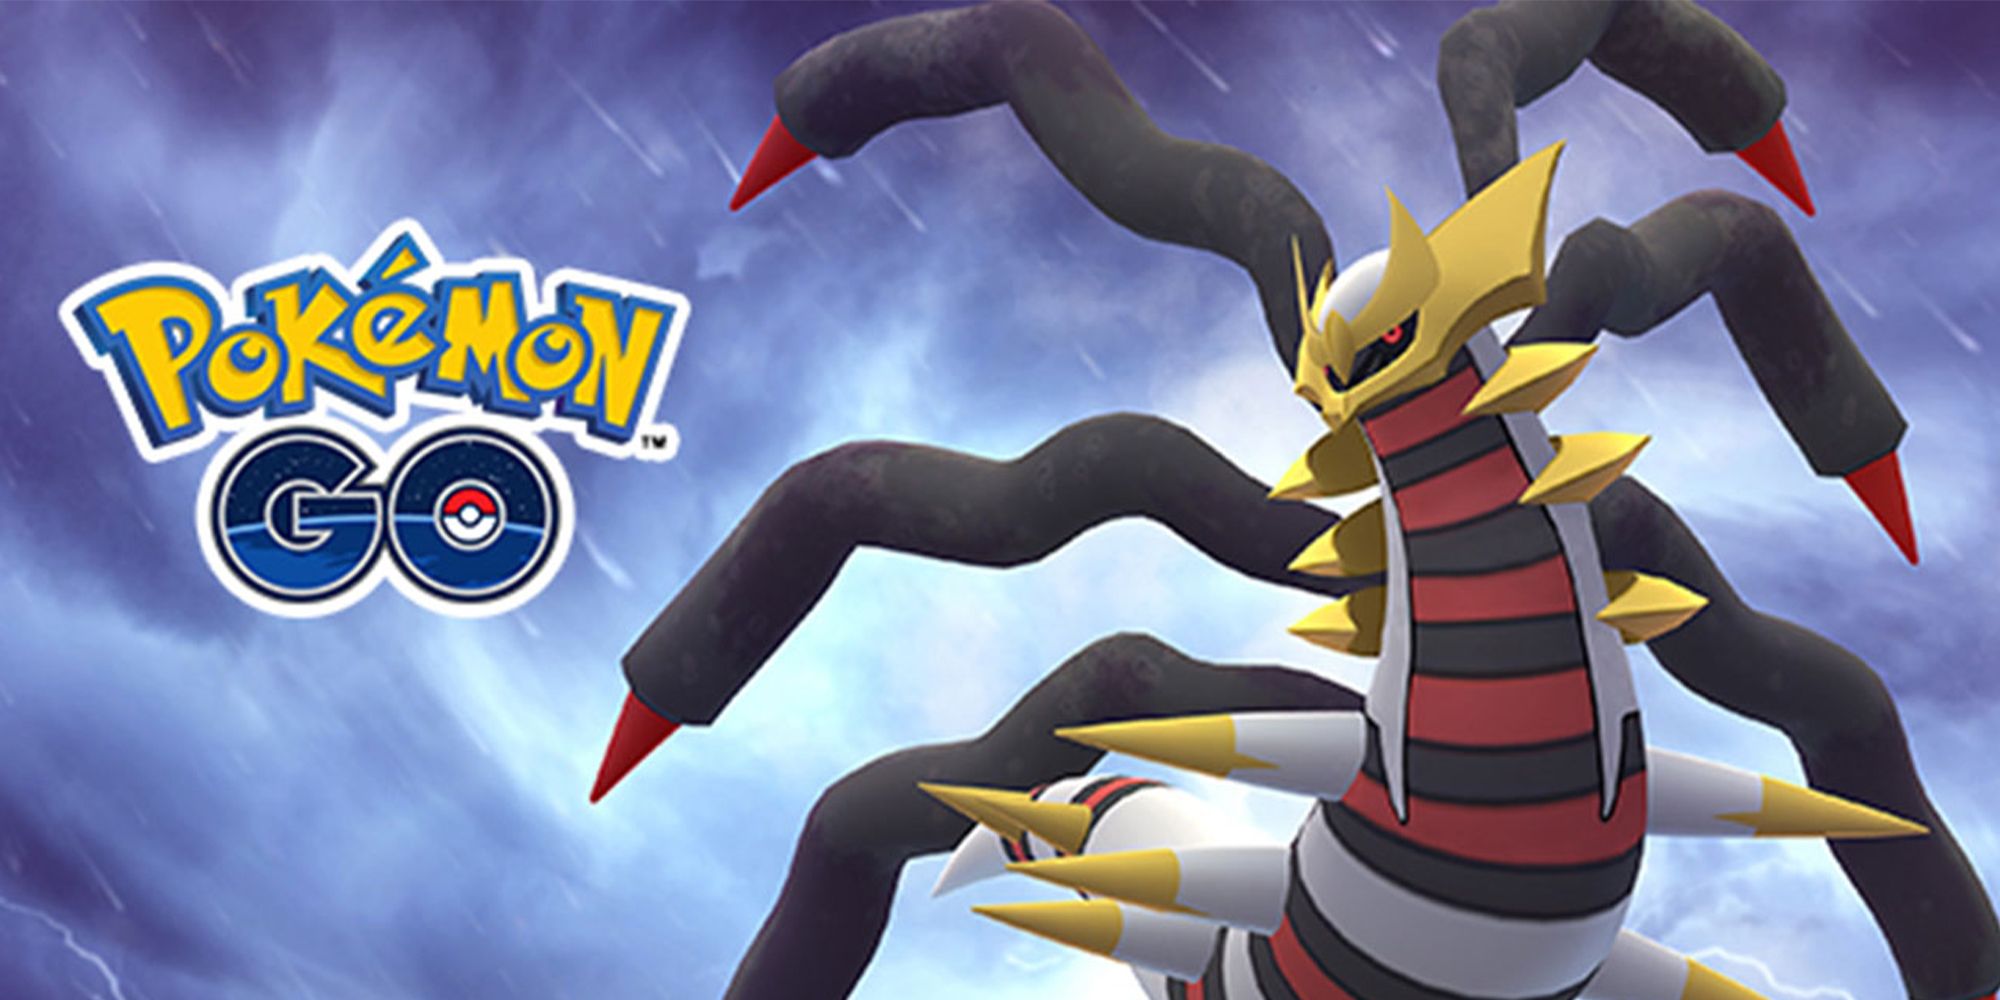 Pokémon GO: The Best Pokémon For PVP Battles